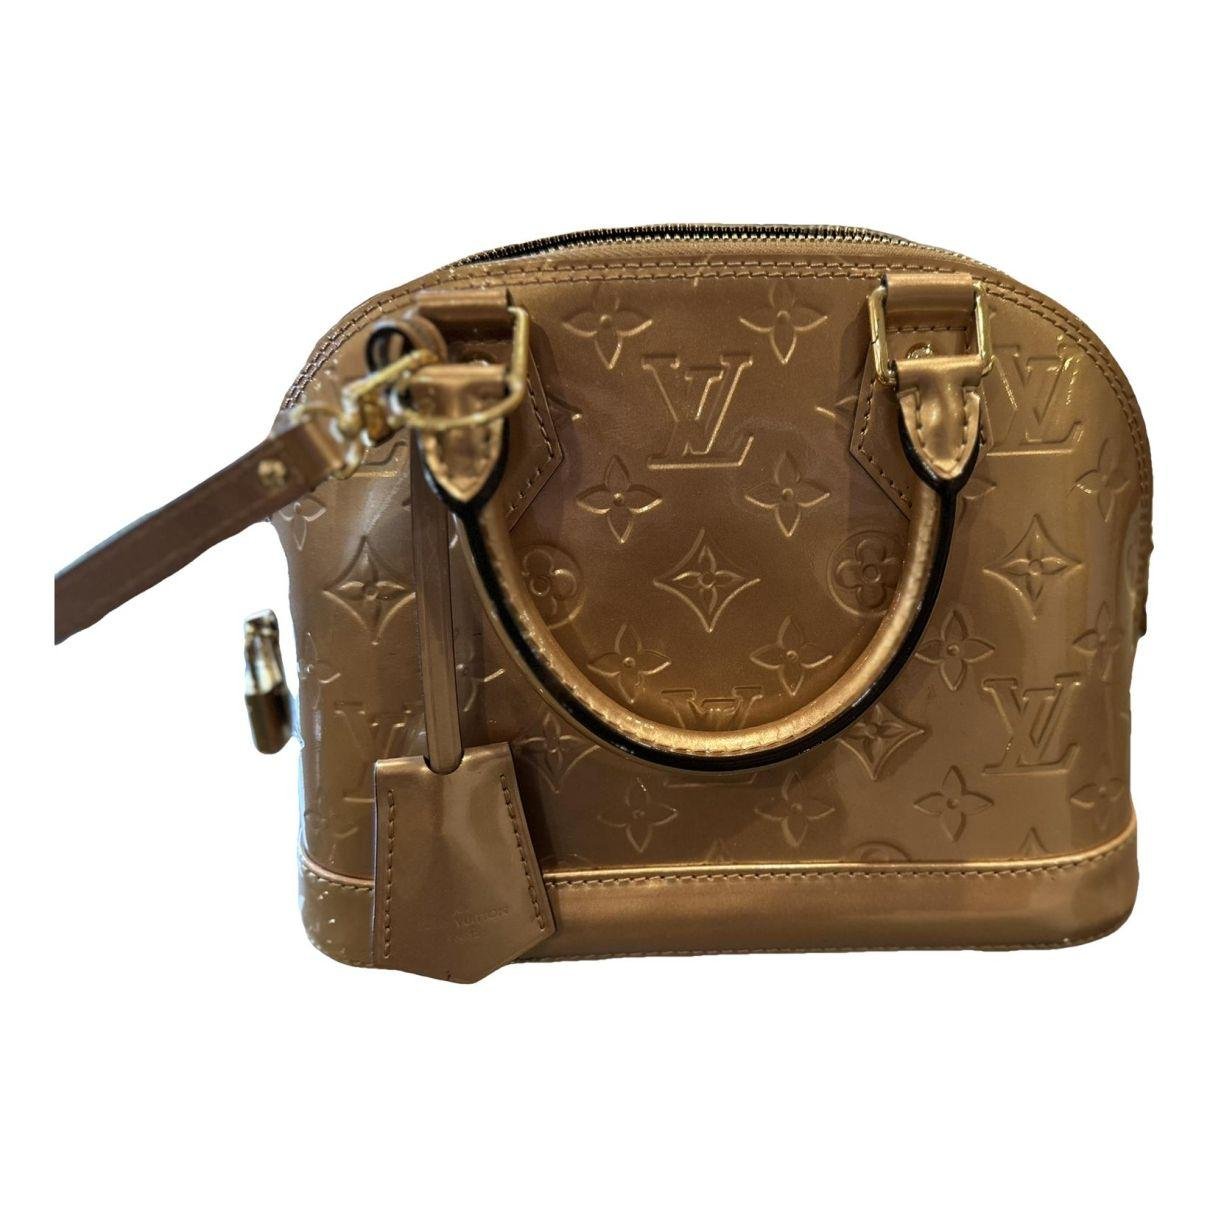 Alma BB patent leather handbag by LOUIS VUITTON